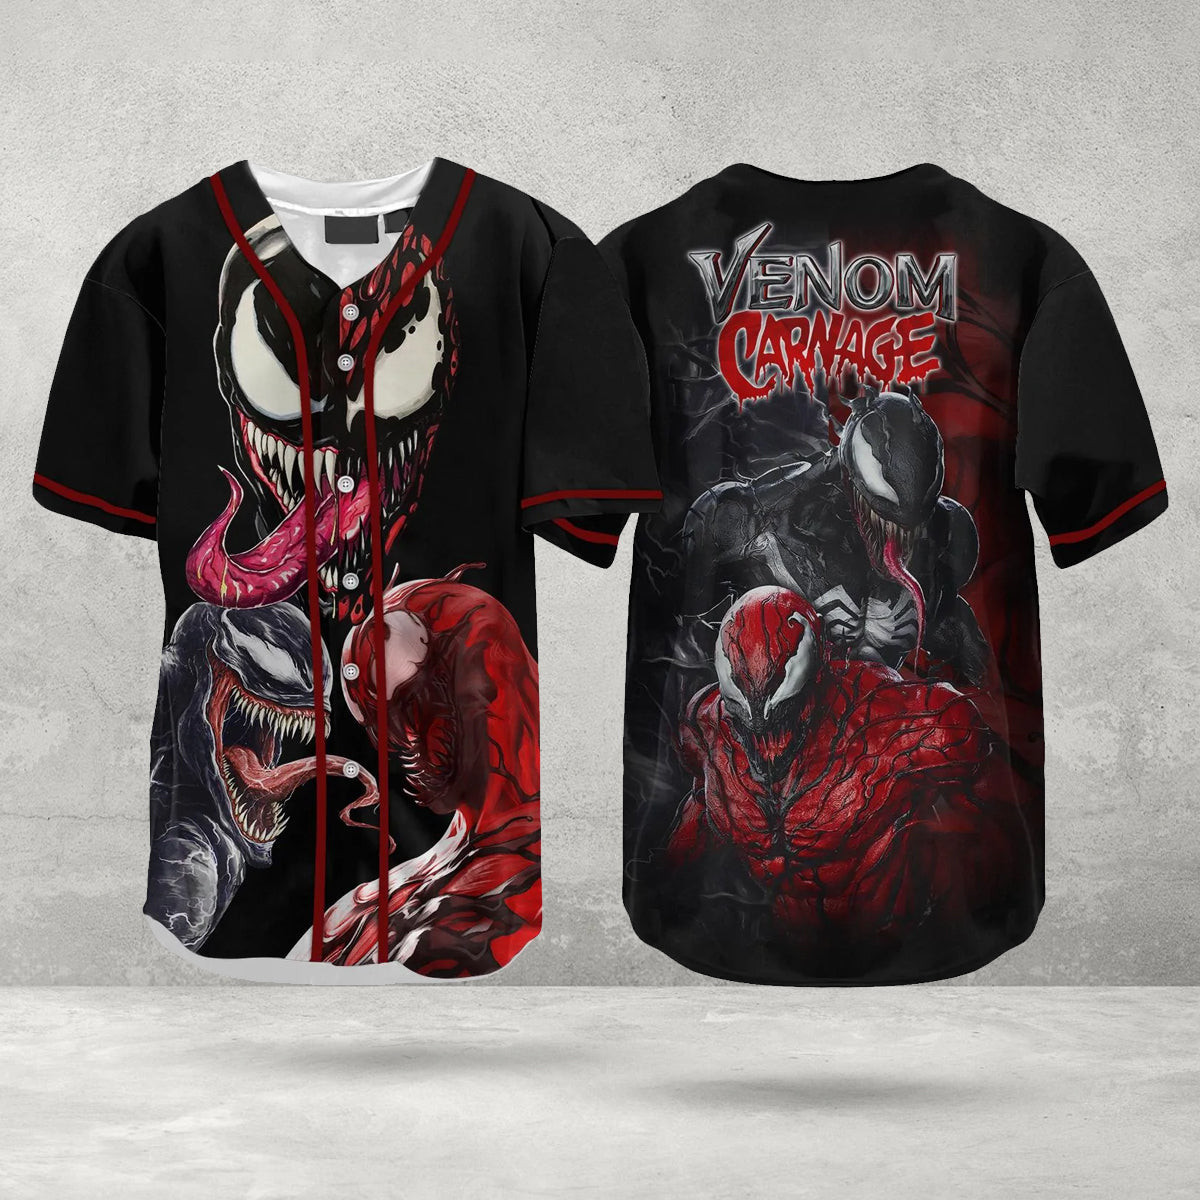 Black And Red Venom Carnage Jersey Shirt, Unisex Baseball Jersey for Men Women